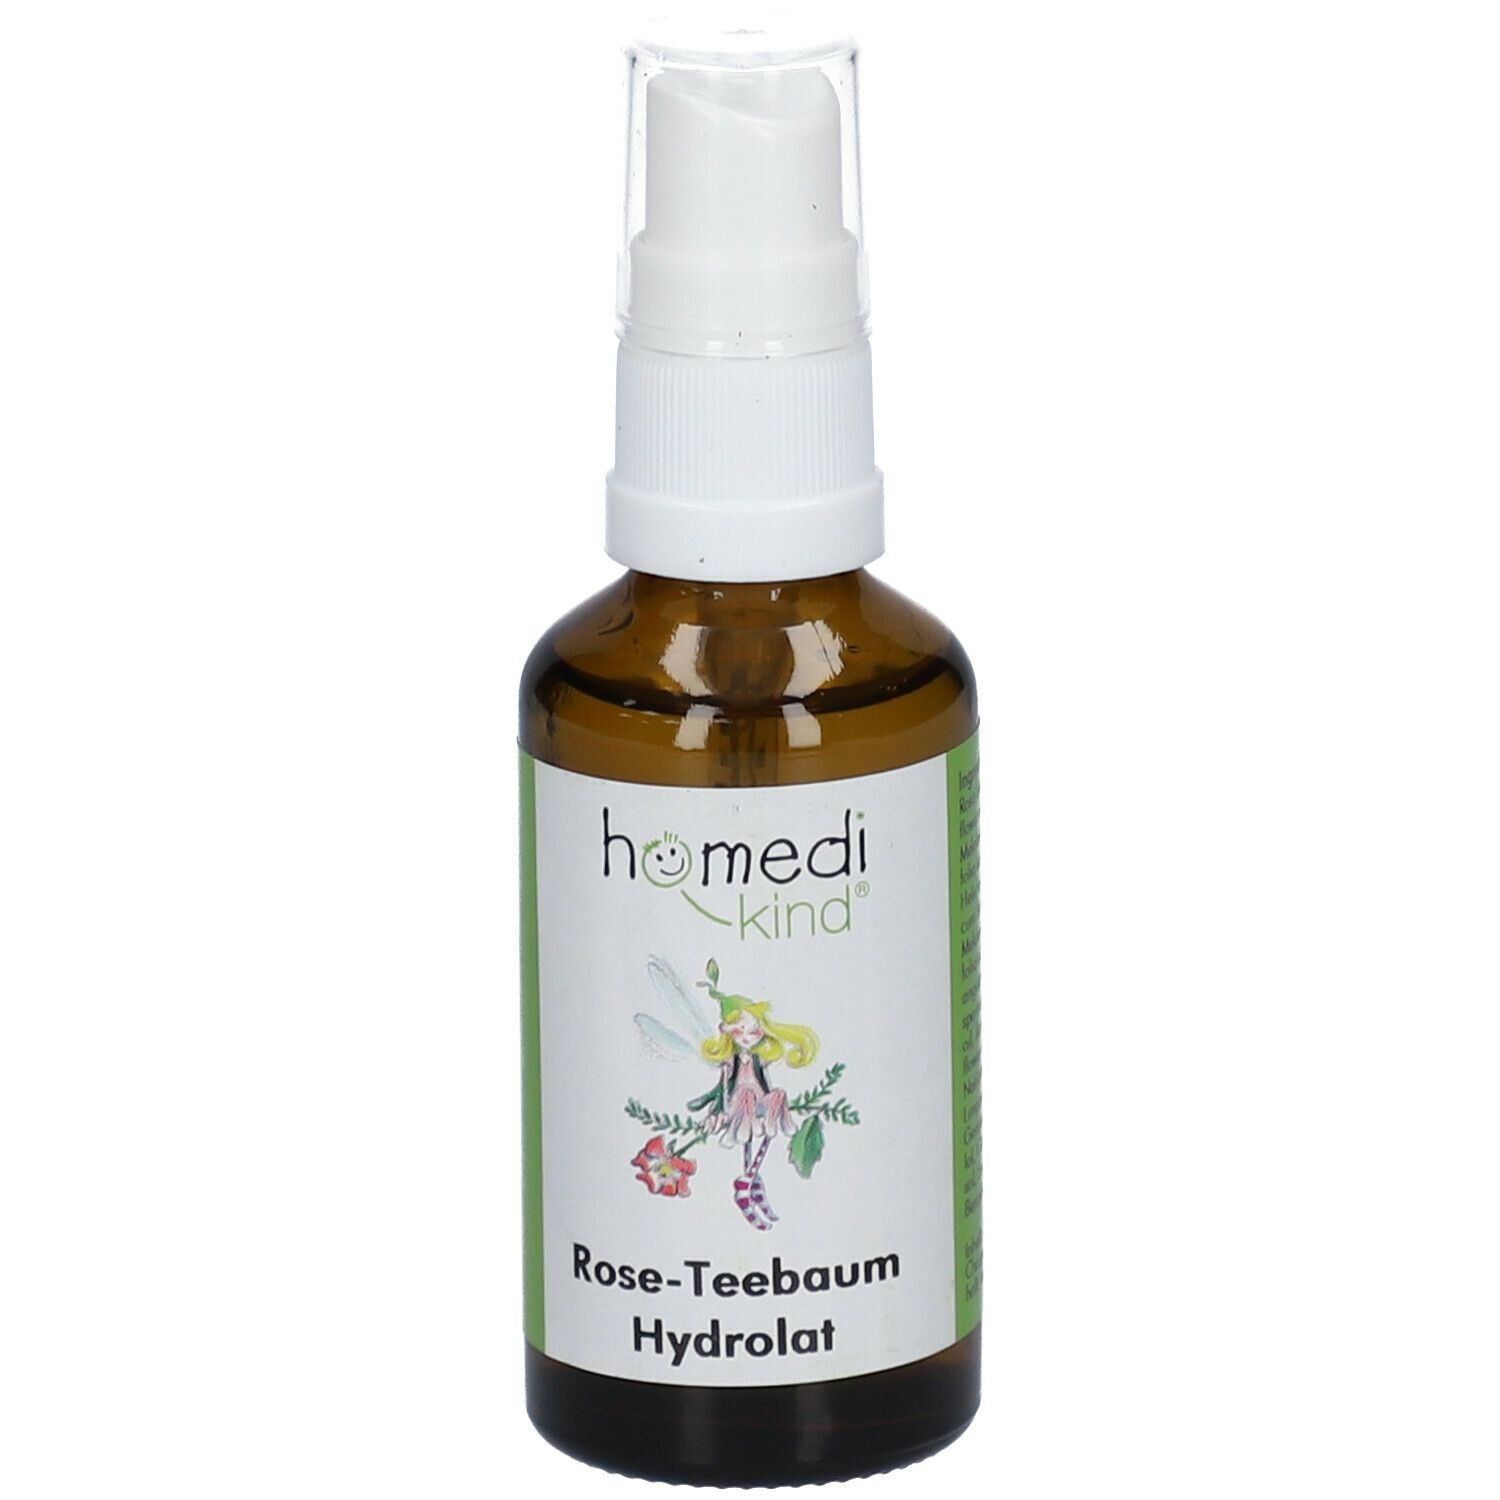 homedi-kind® Rose-Teebaum Hydrolat